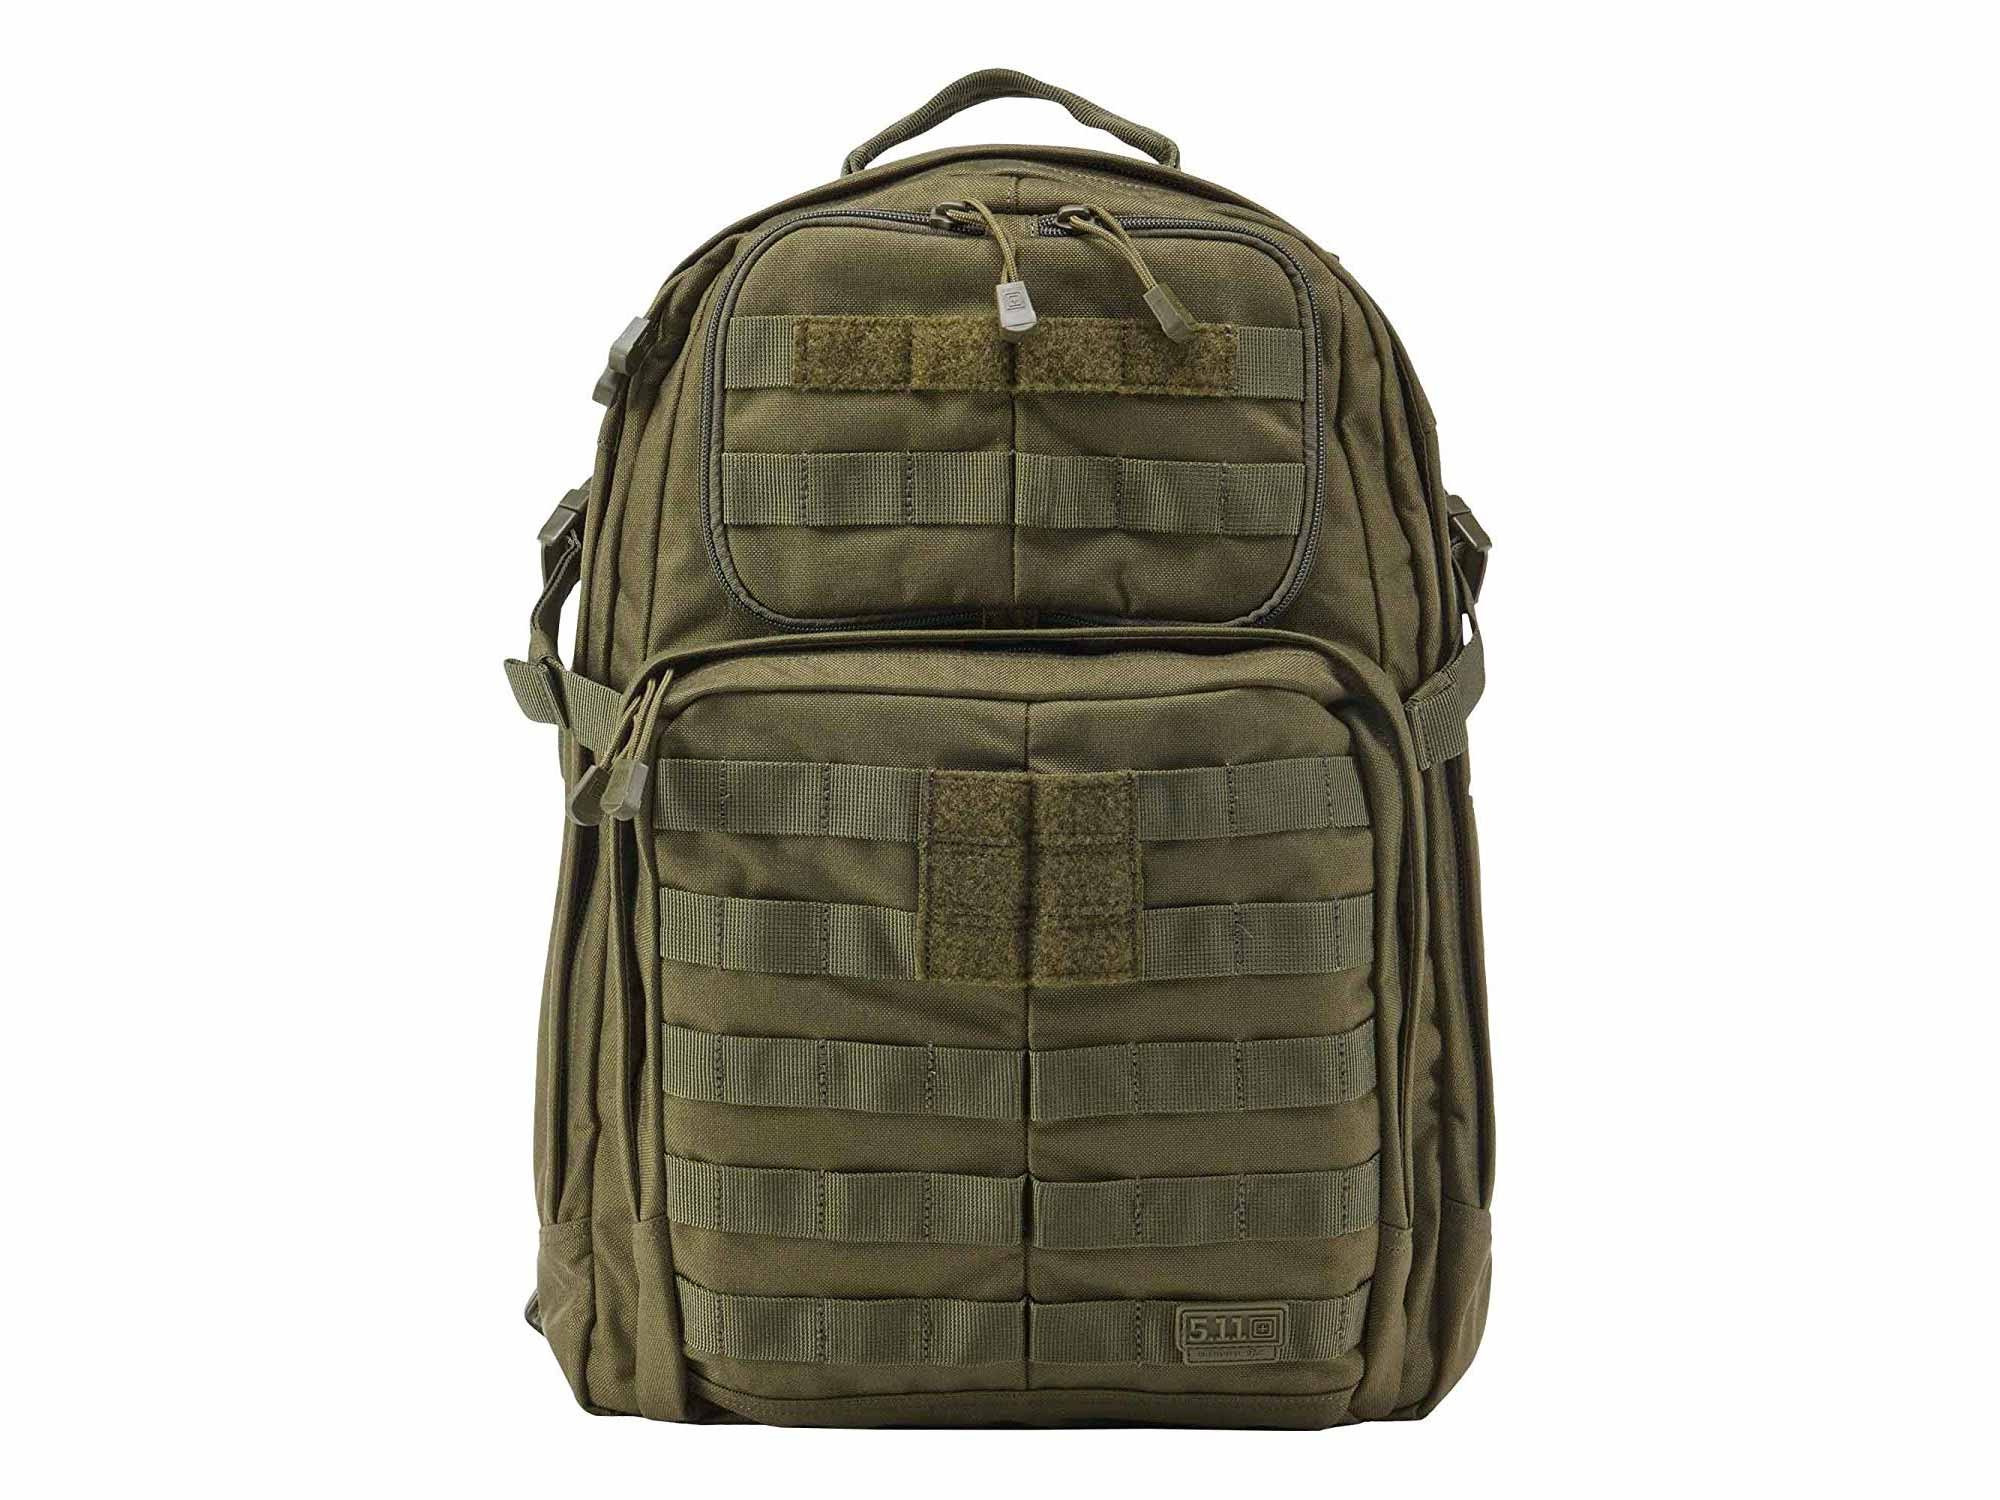 Army green military backpack